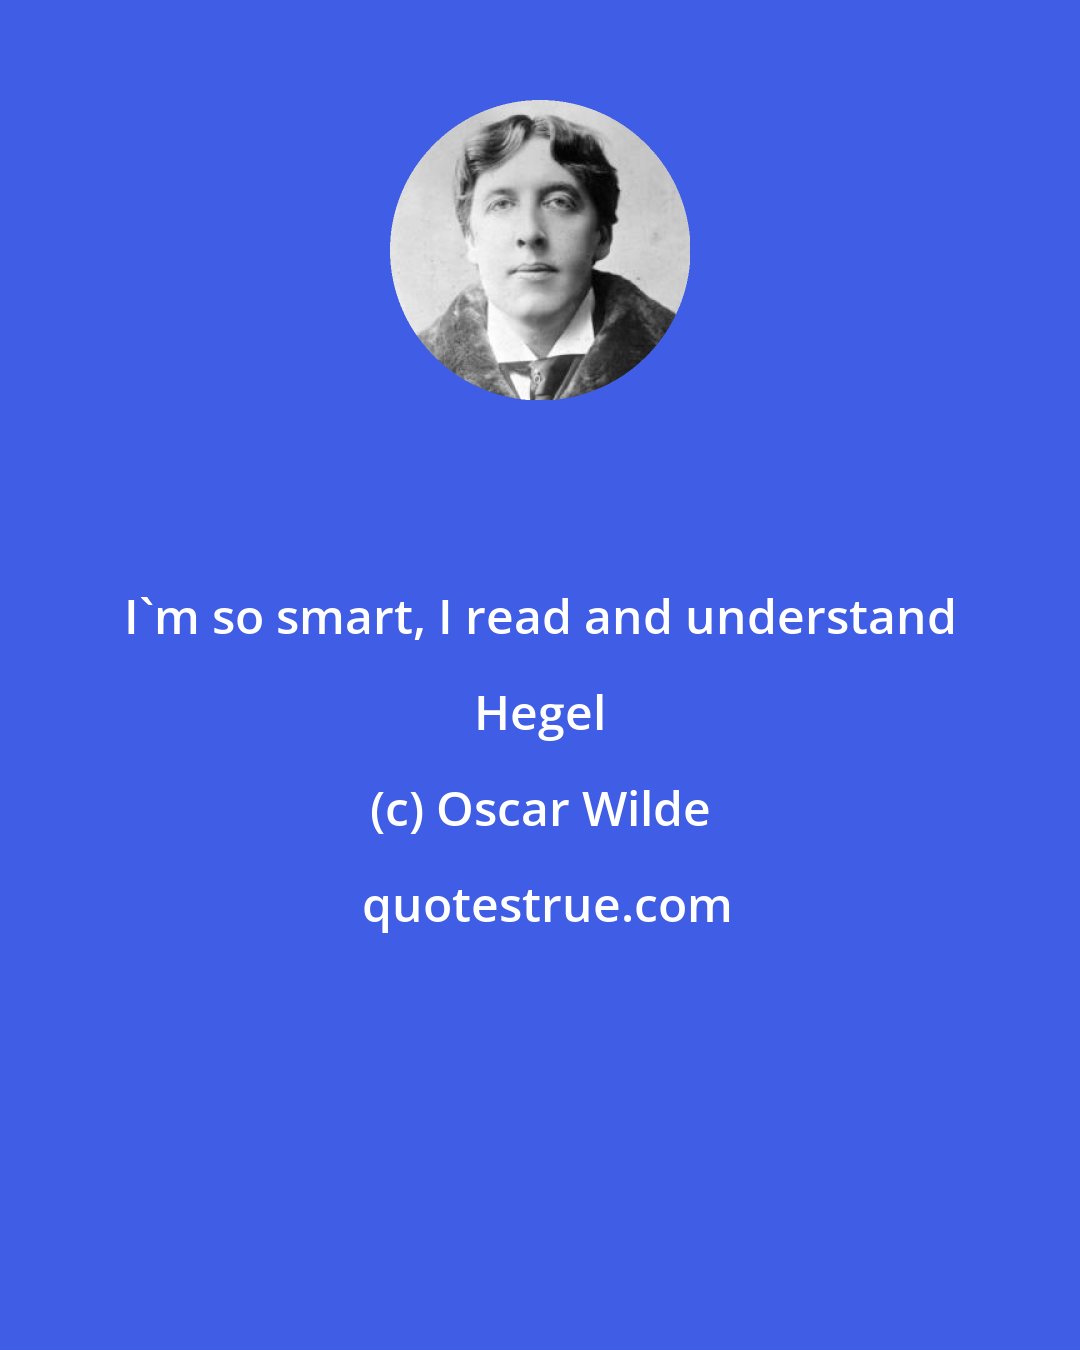 Oscar Wilde: I'm so smart, I read and understand Hegel